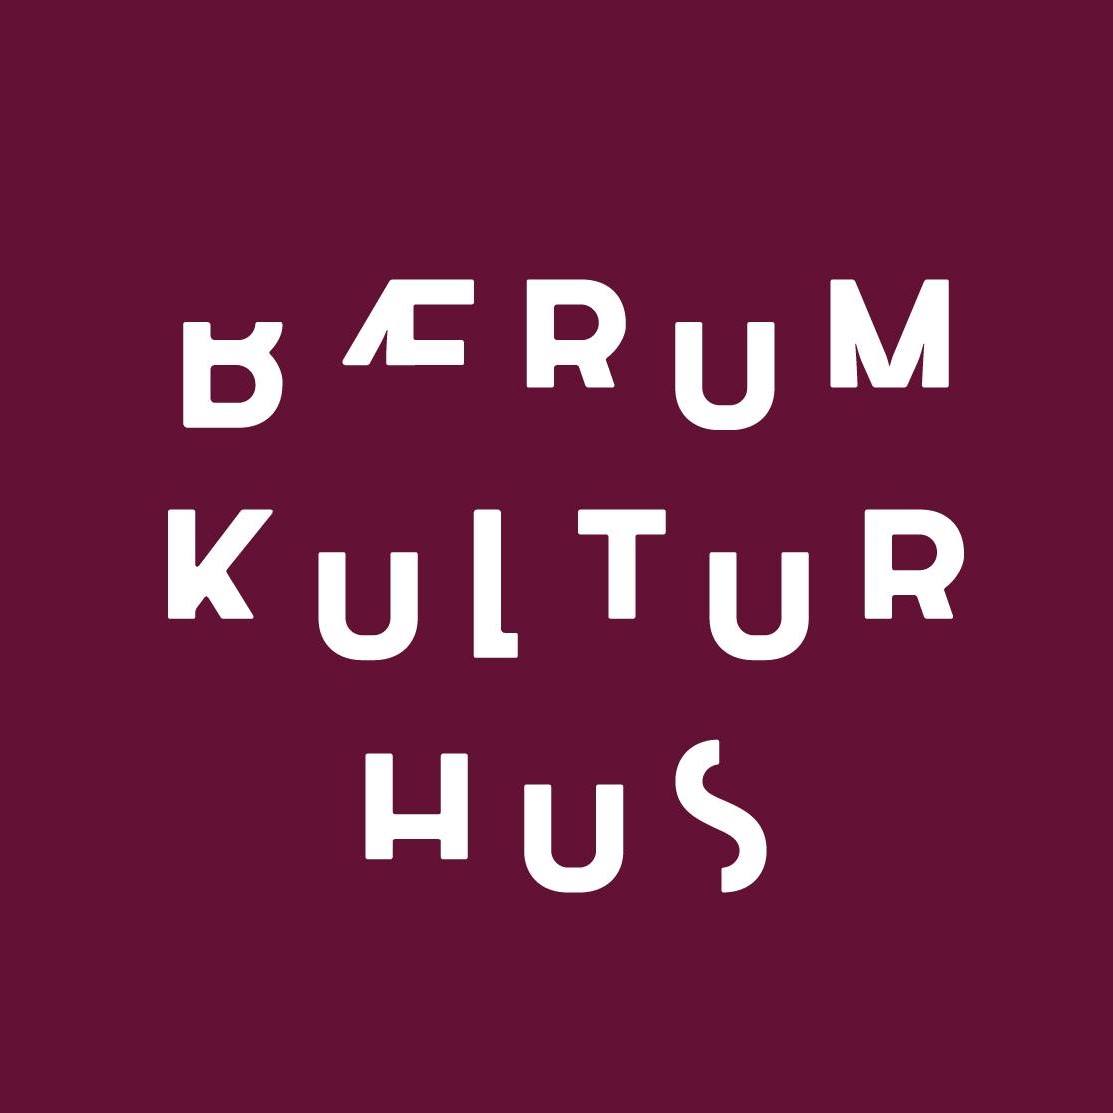 Bærum Kulturhus